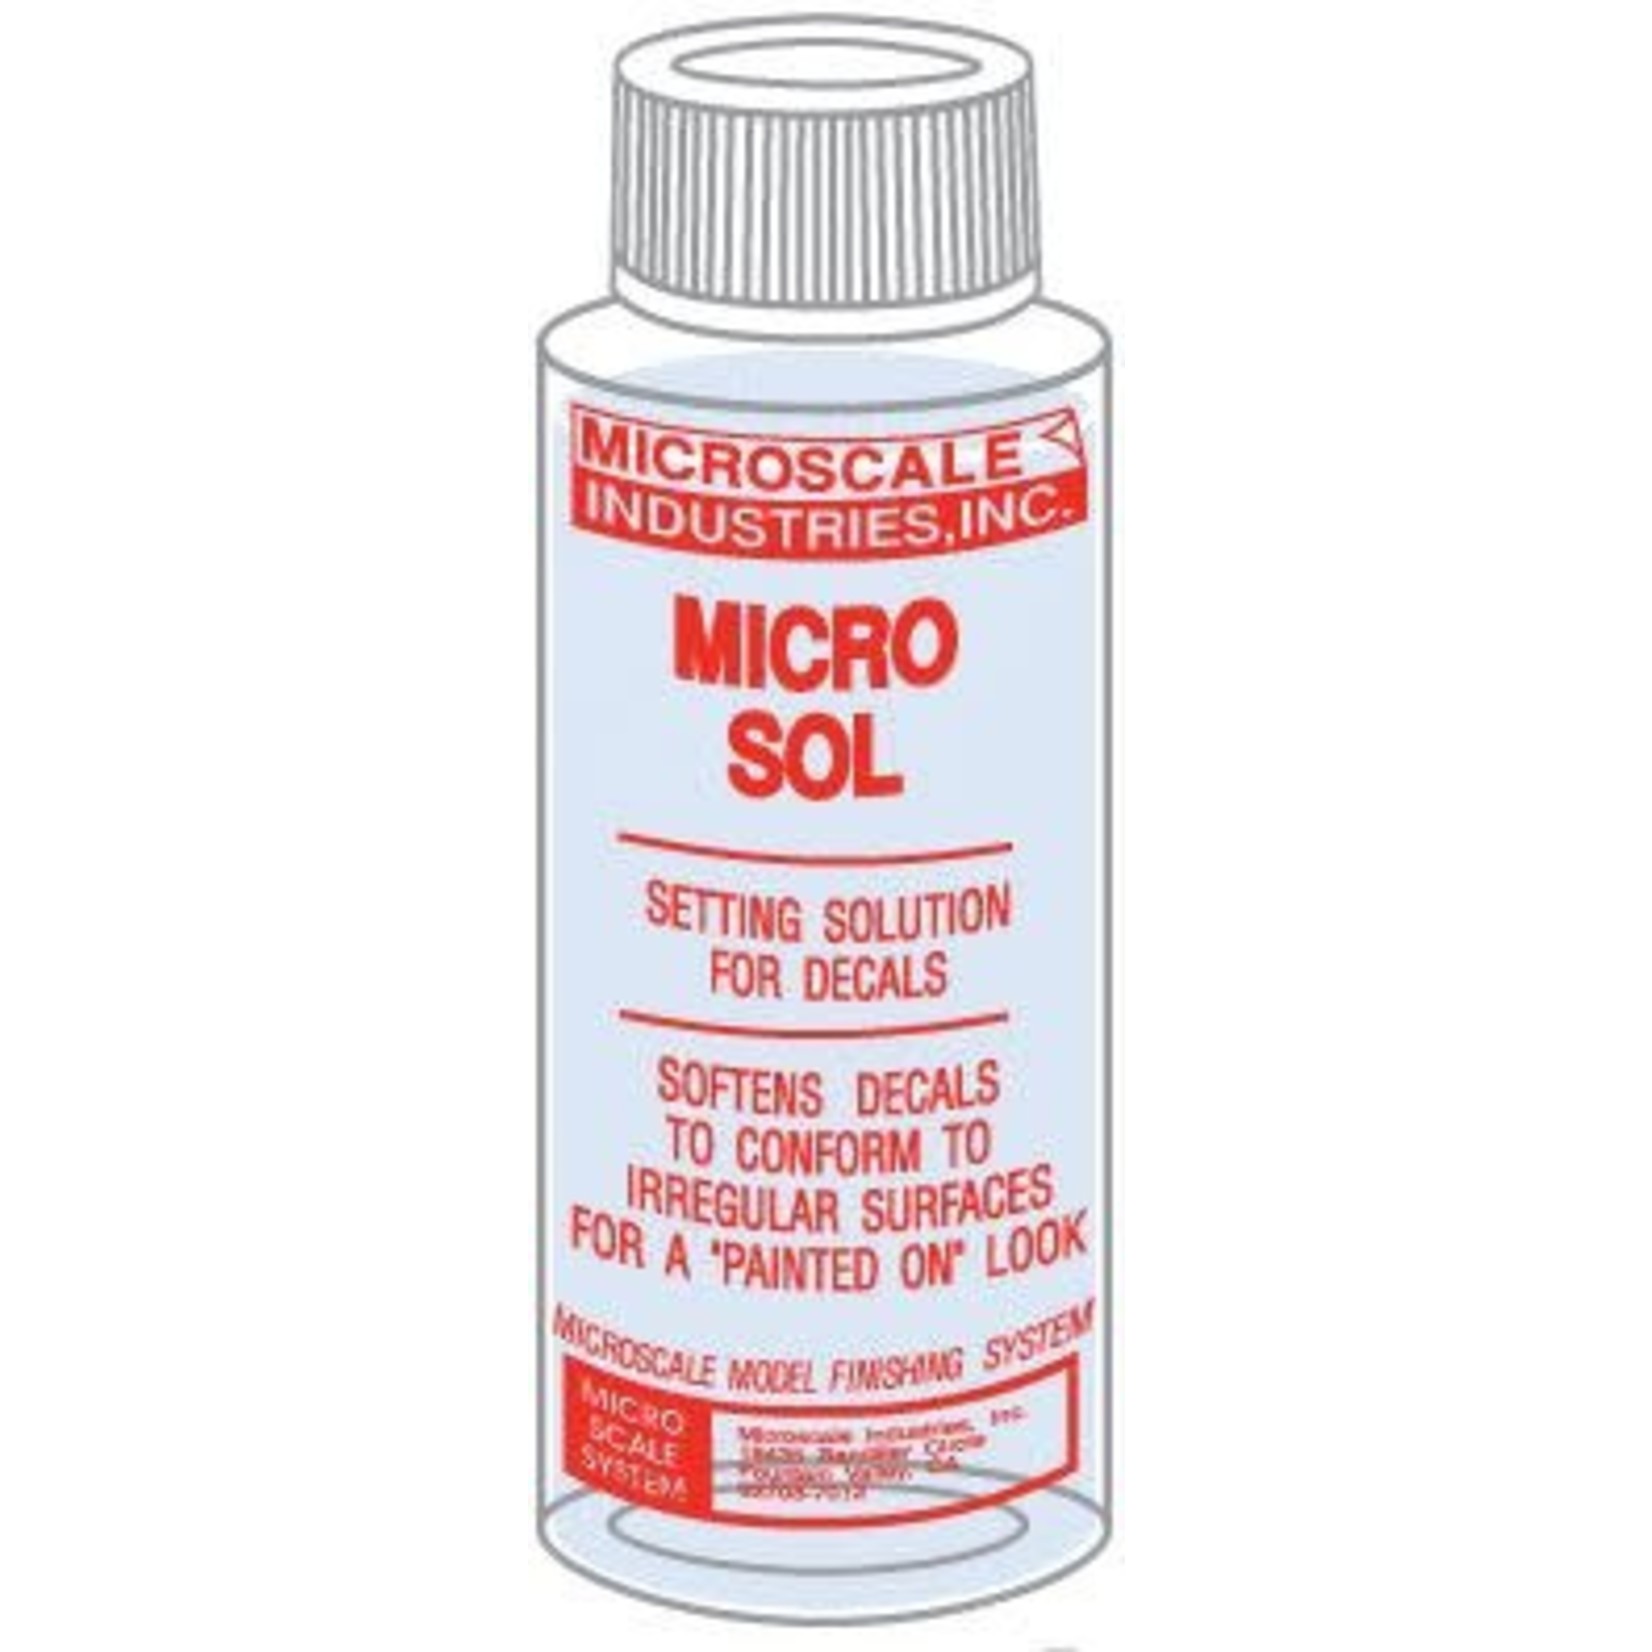 Microscale Microscale MI-2 Micro Sol 30ml